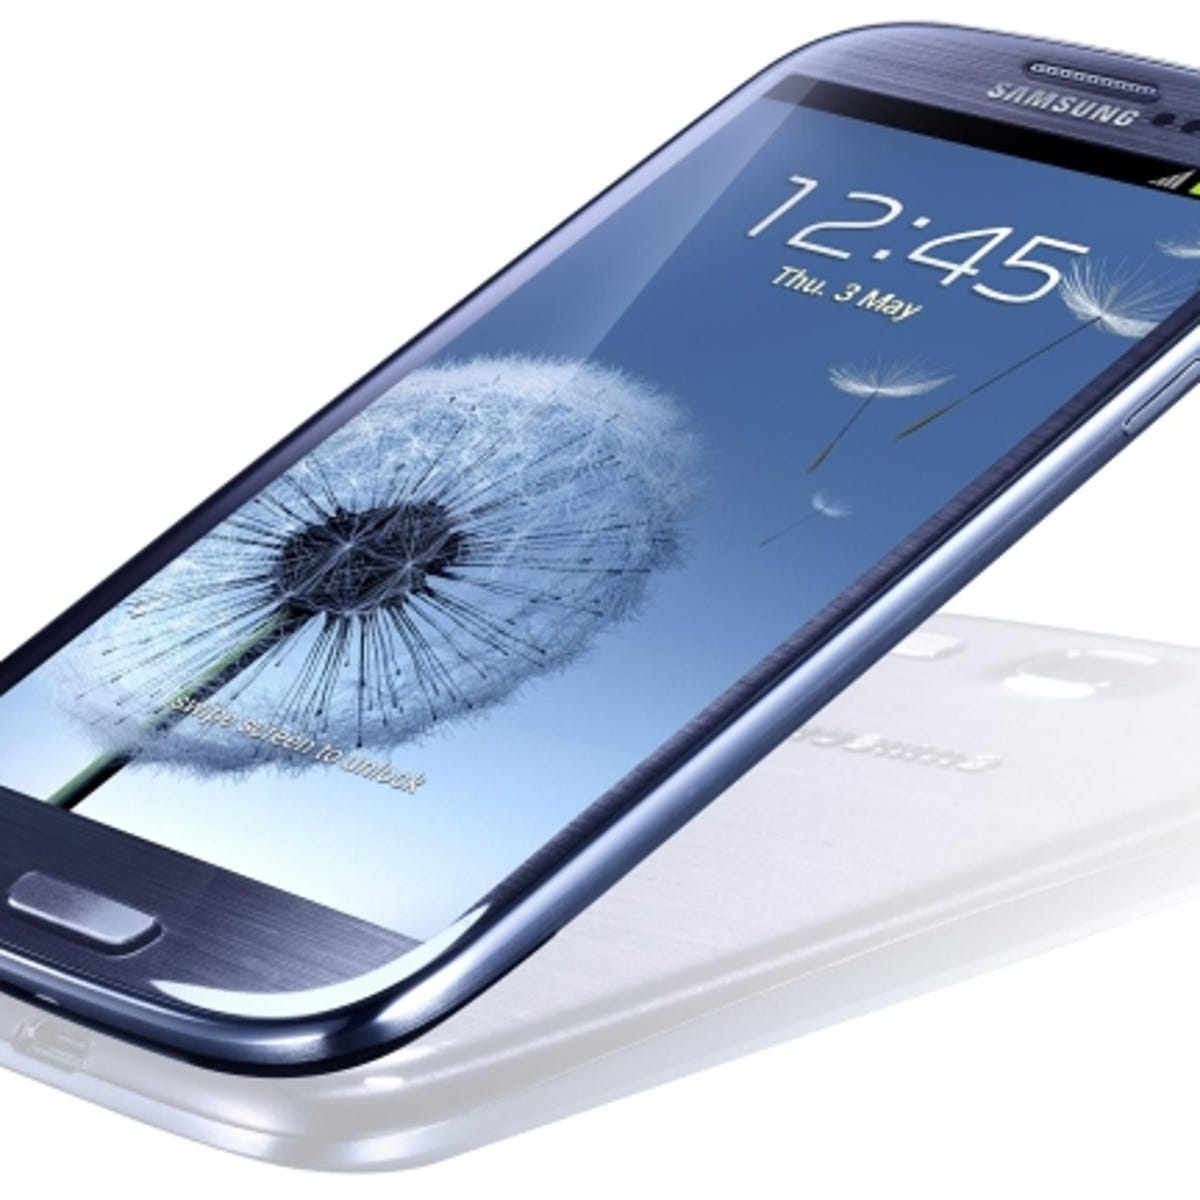 Телефоны самсунг цены спб. Samsung Galaxy s3. Samsung 2023 смартфон. Новый самсунг галакси 2023. Samsung Galaxy s III.